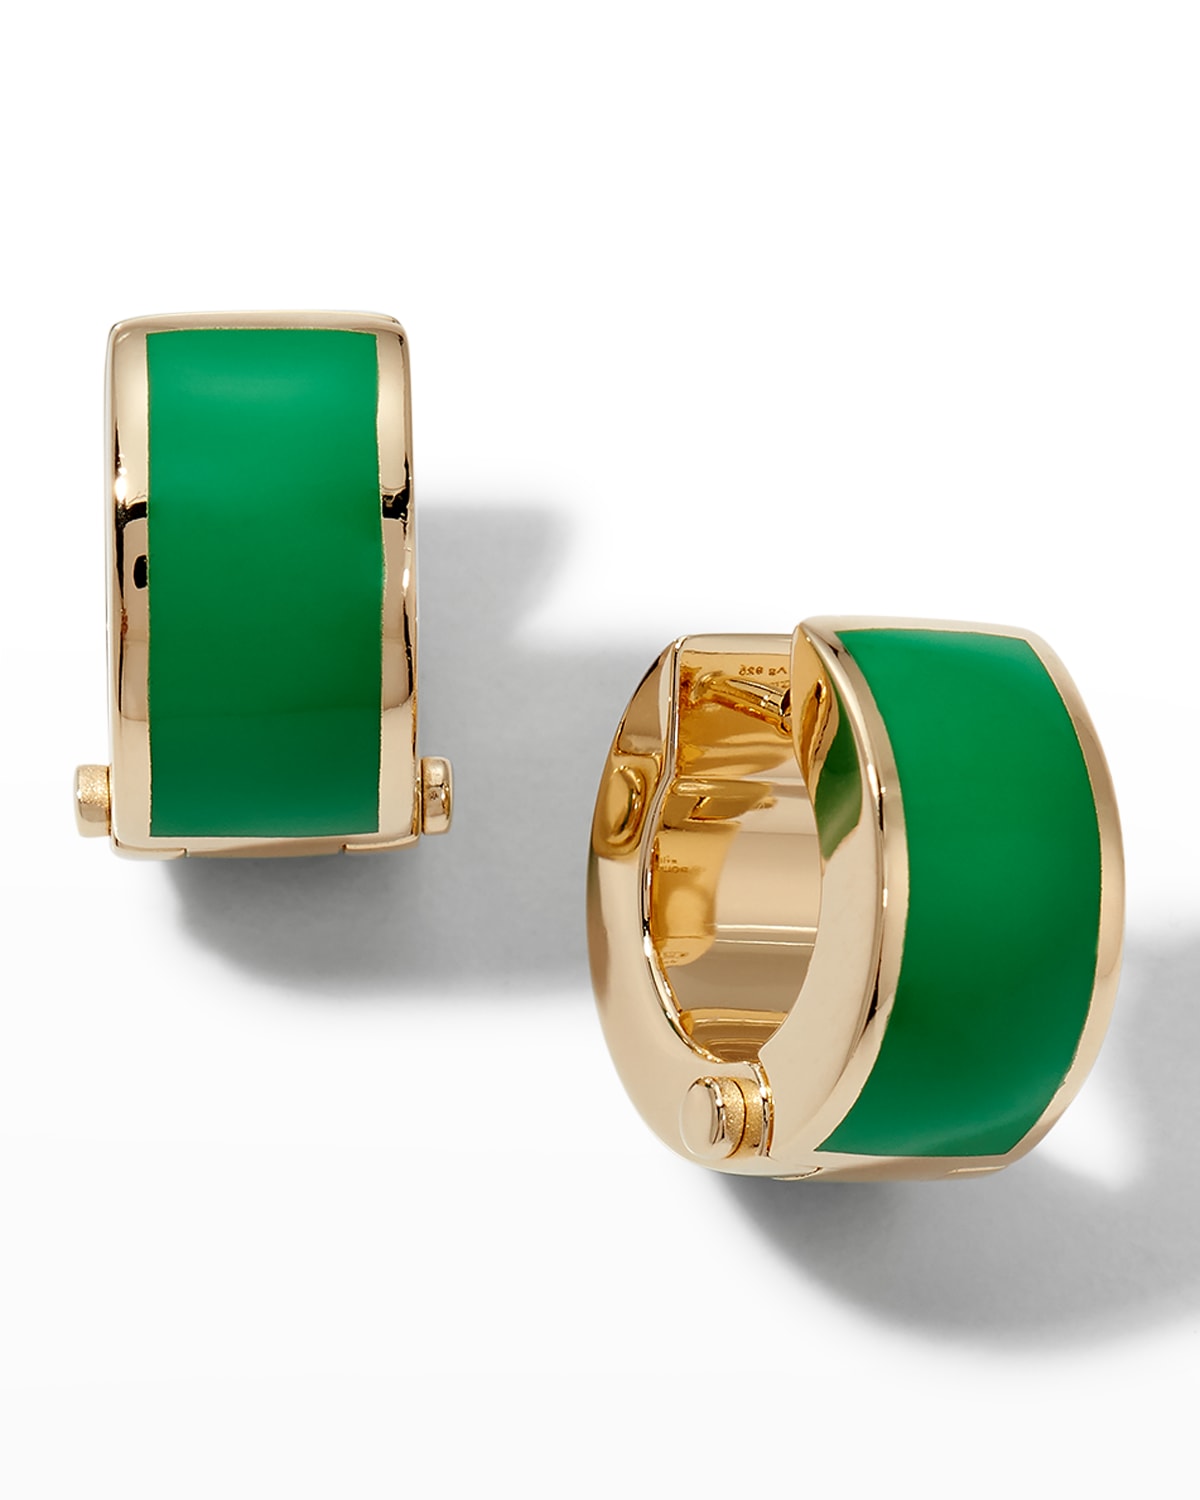 Bottega Veneta Enamel and Gold-Plated Earrings, Green